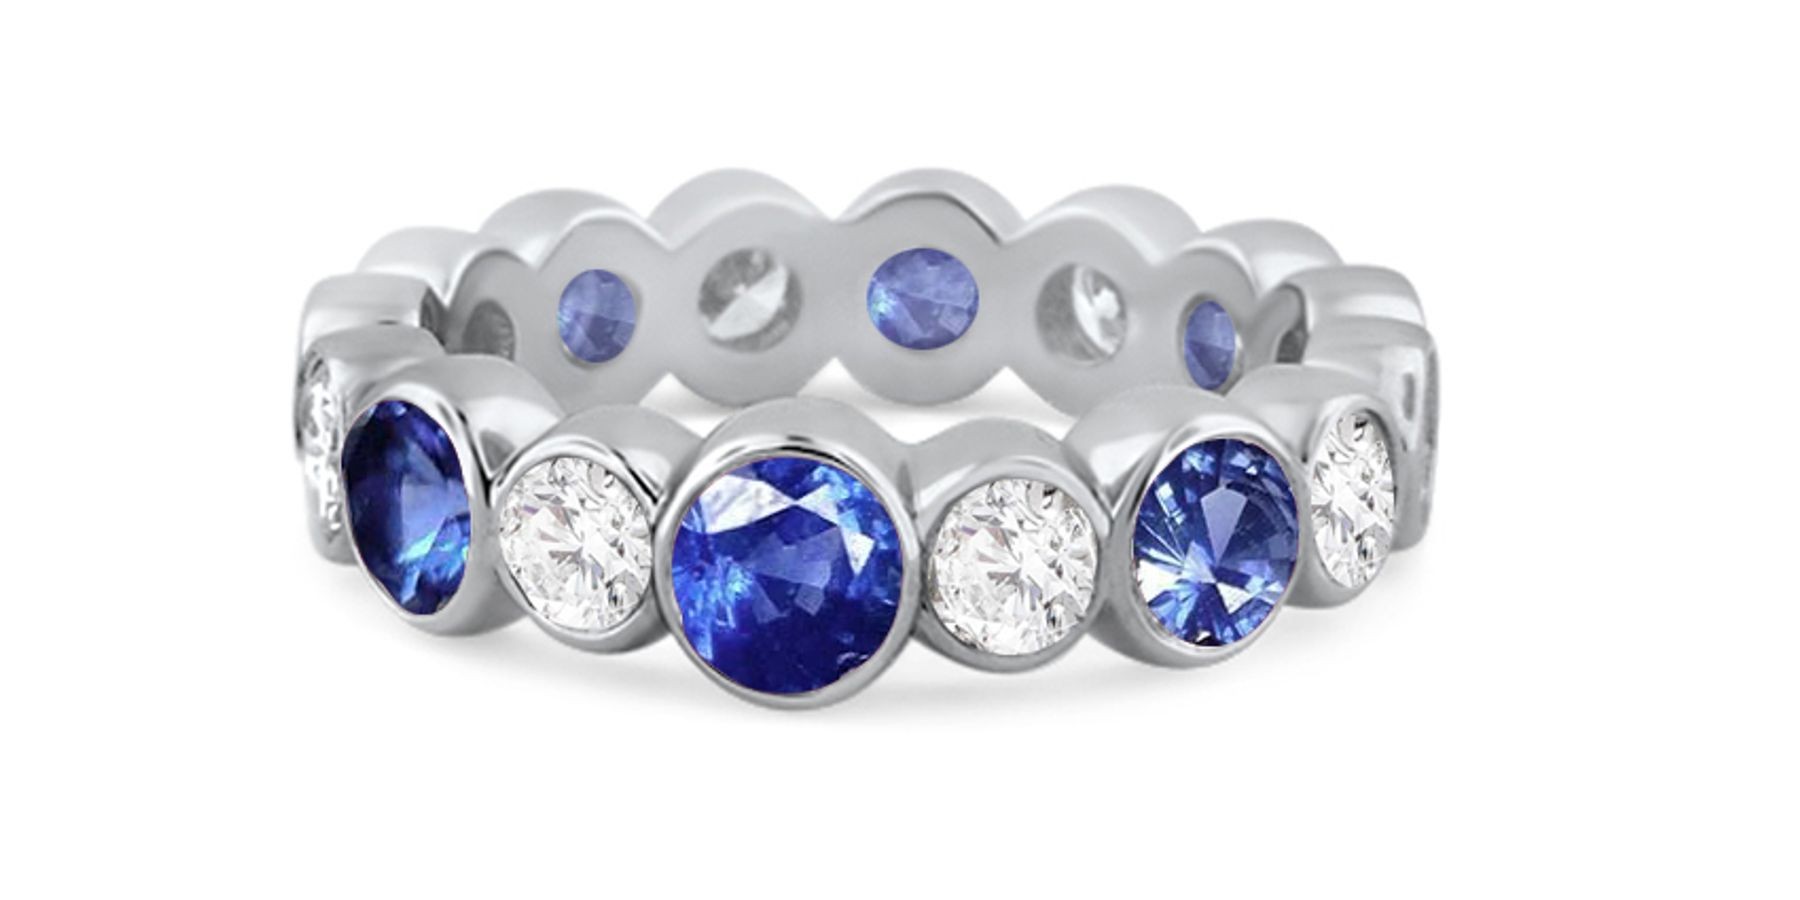 Shop Fine Quality Made To Order Round Bezel Set Diamond & Blue Sapphire Eternity Style Wedding & Anniversary Rings